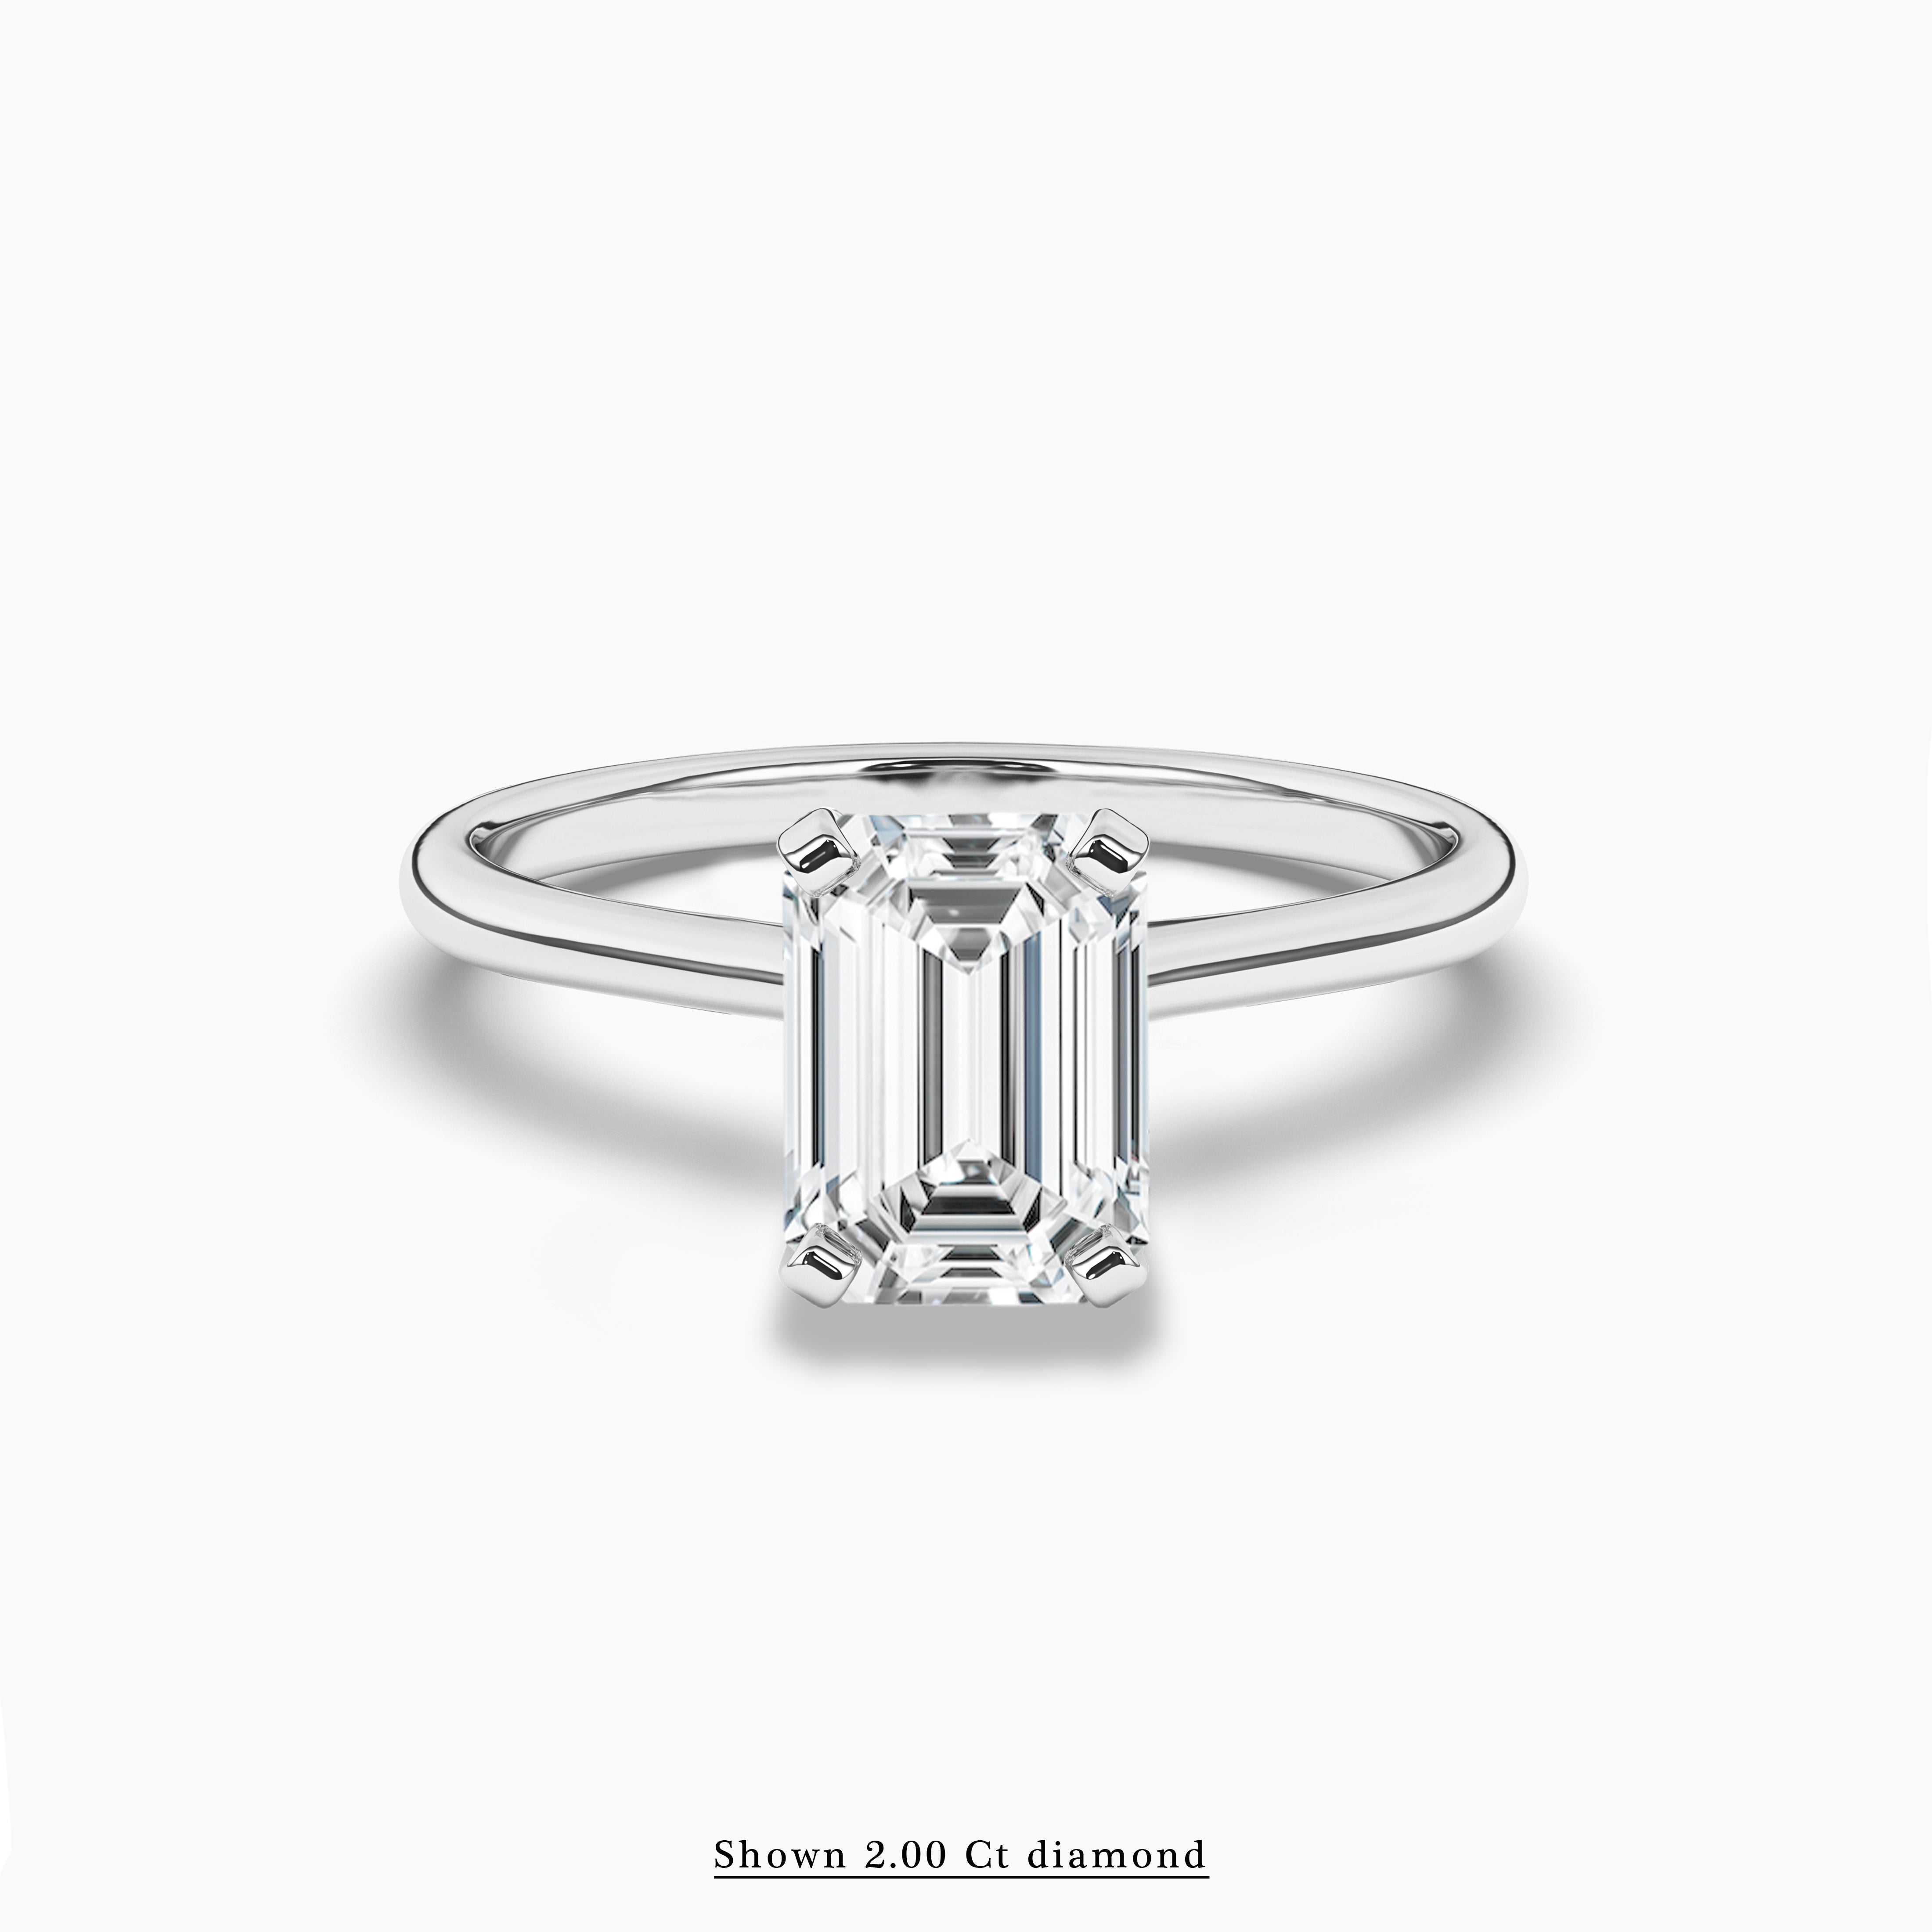 2.00 ct white gold diamond engagement ring